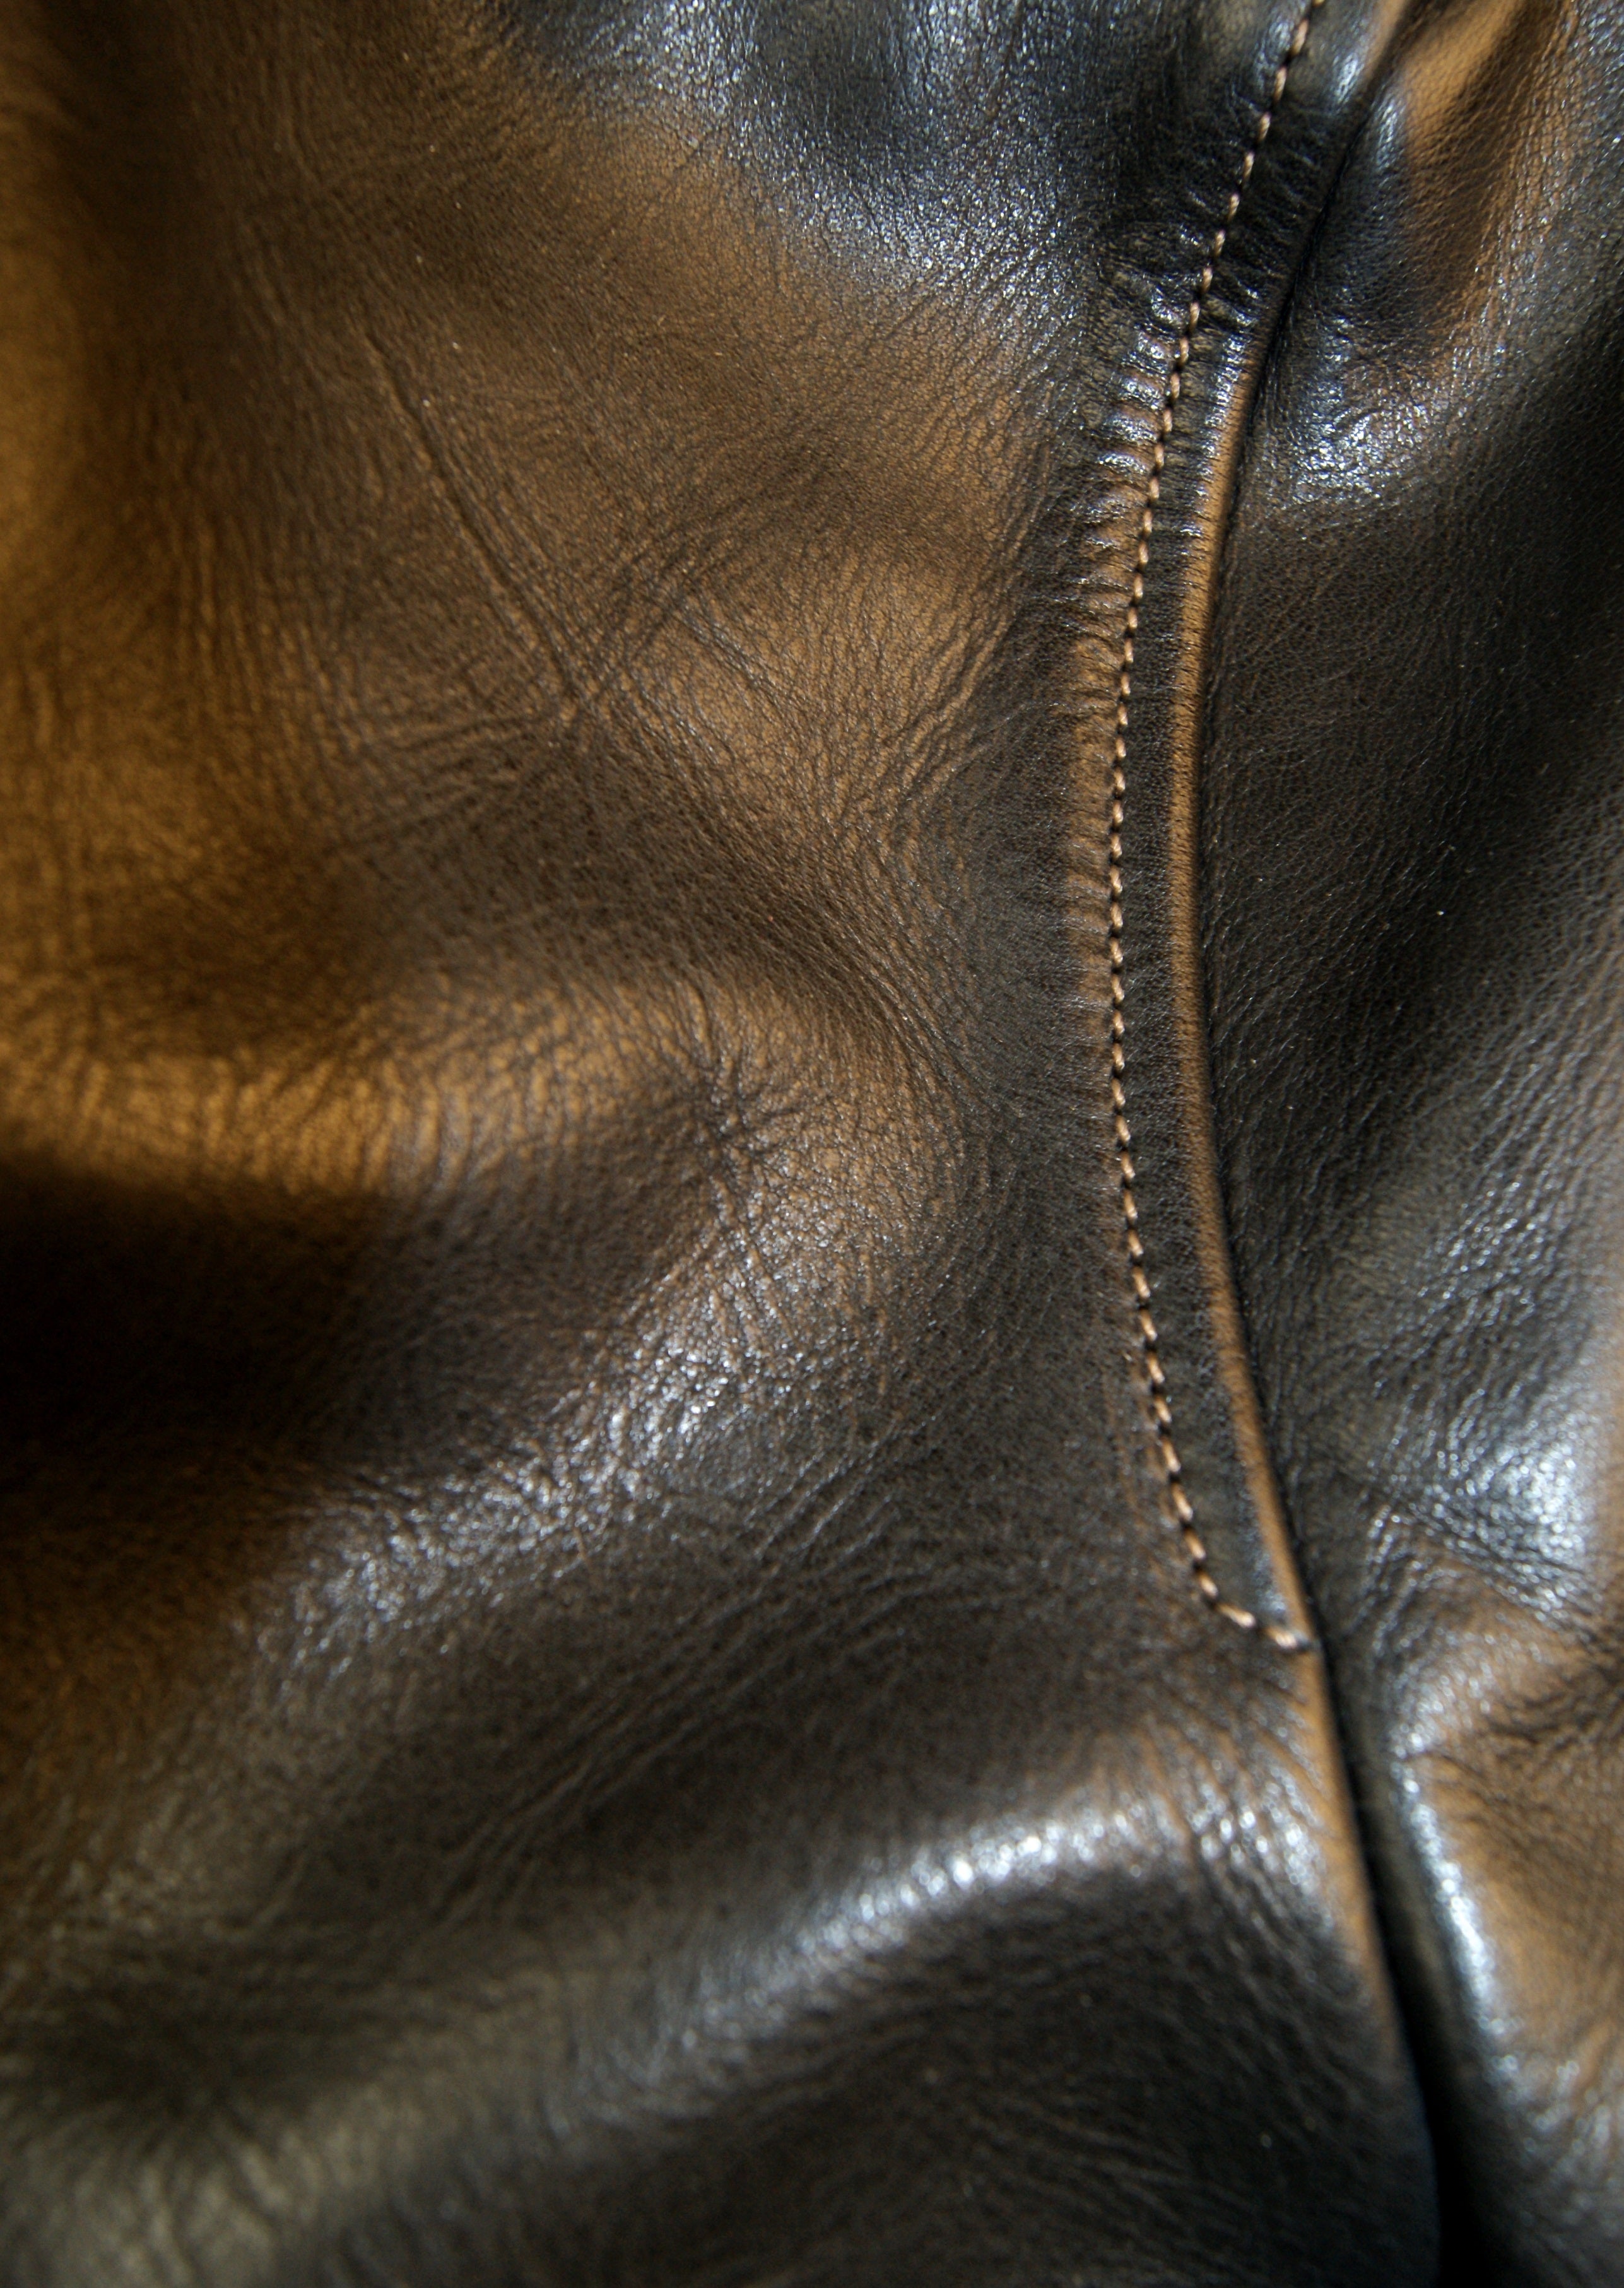 Thedi Button-Up Markos Jacket, size Medium, Black Cowhide